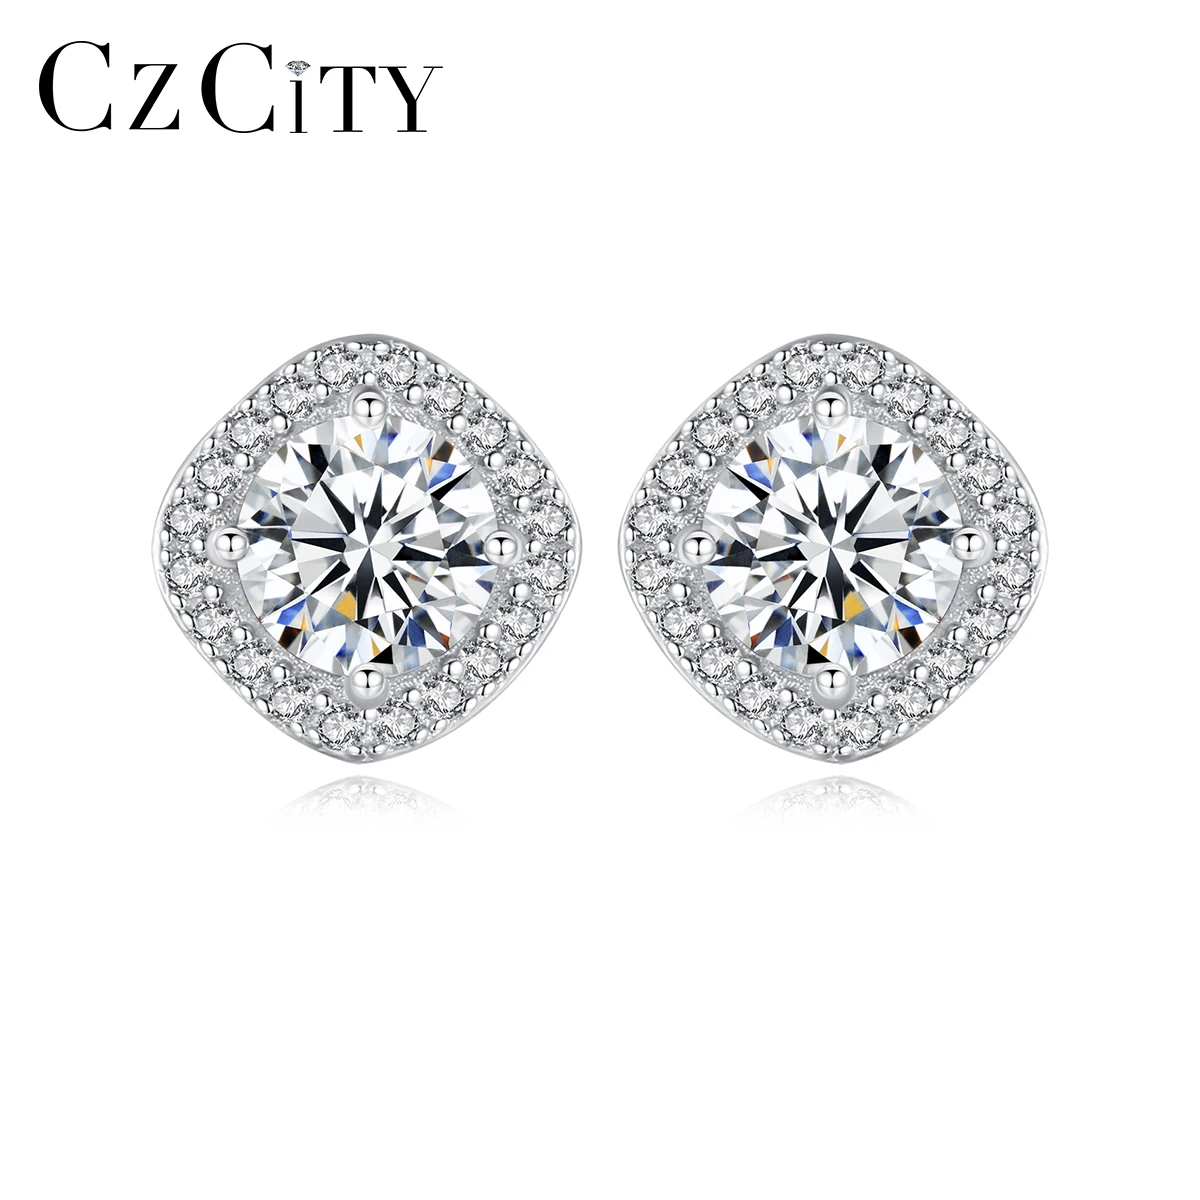 

CZCITY Fancy Jewelry Luxury Woman Moissanite Gra VVS S925 Earing Trendy Square Shaped For Lady Diamond Stud Earring